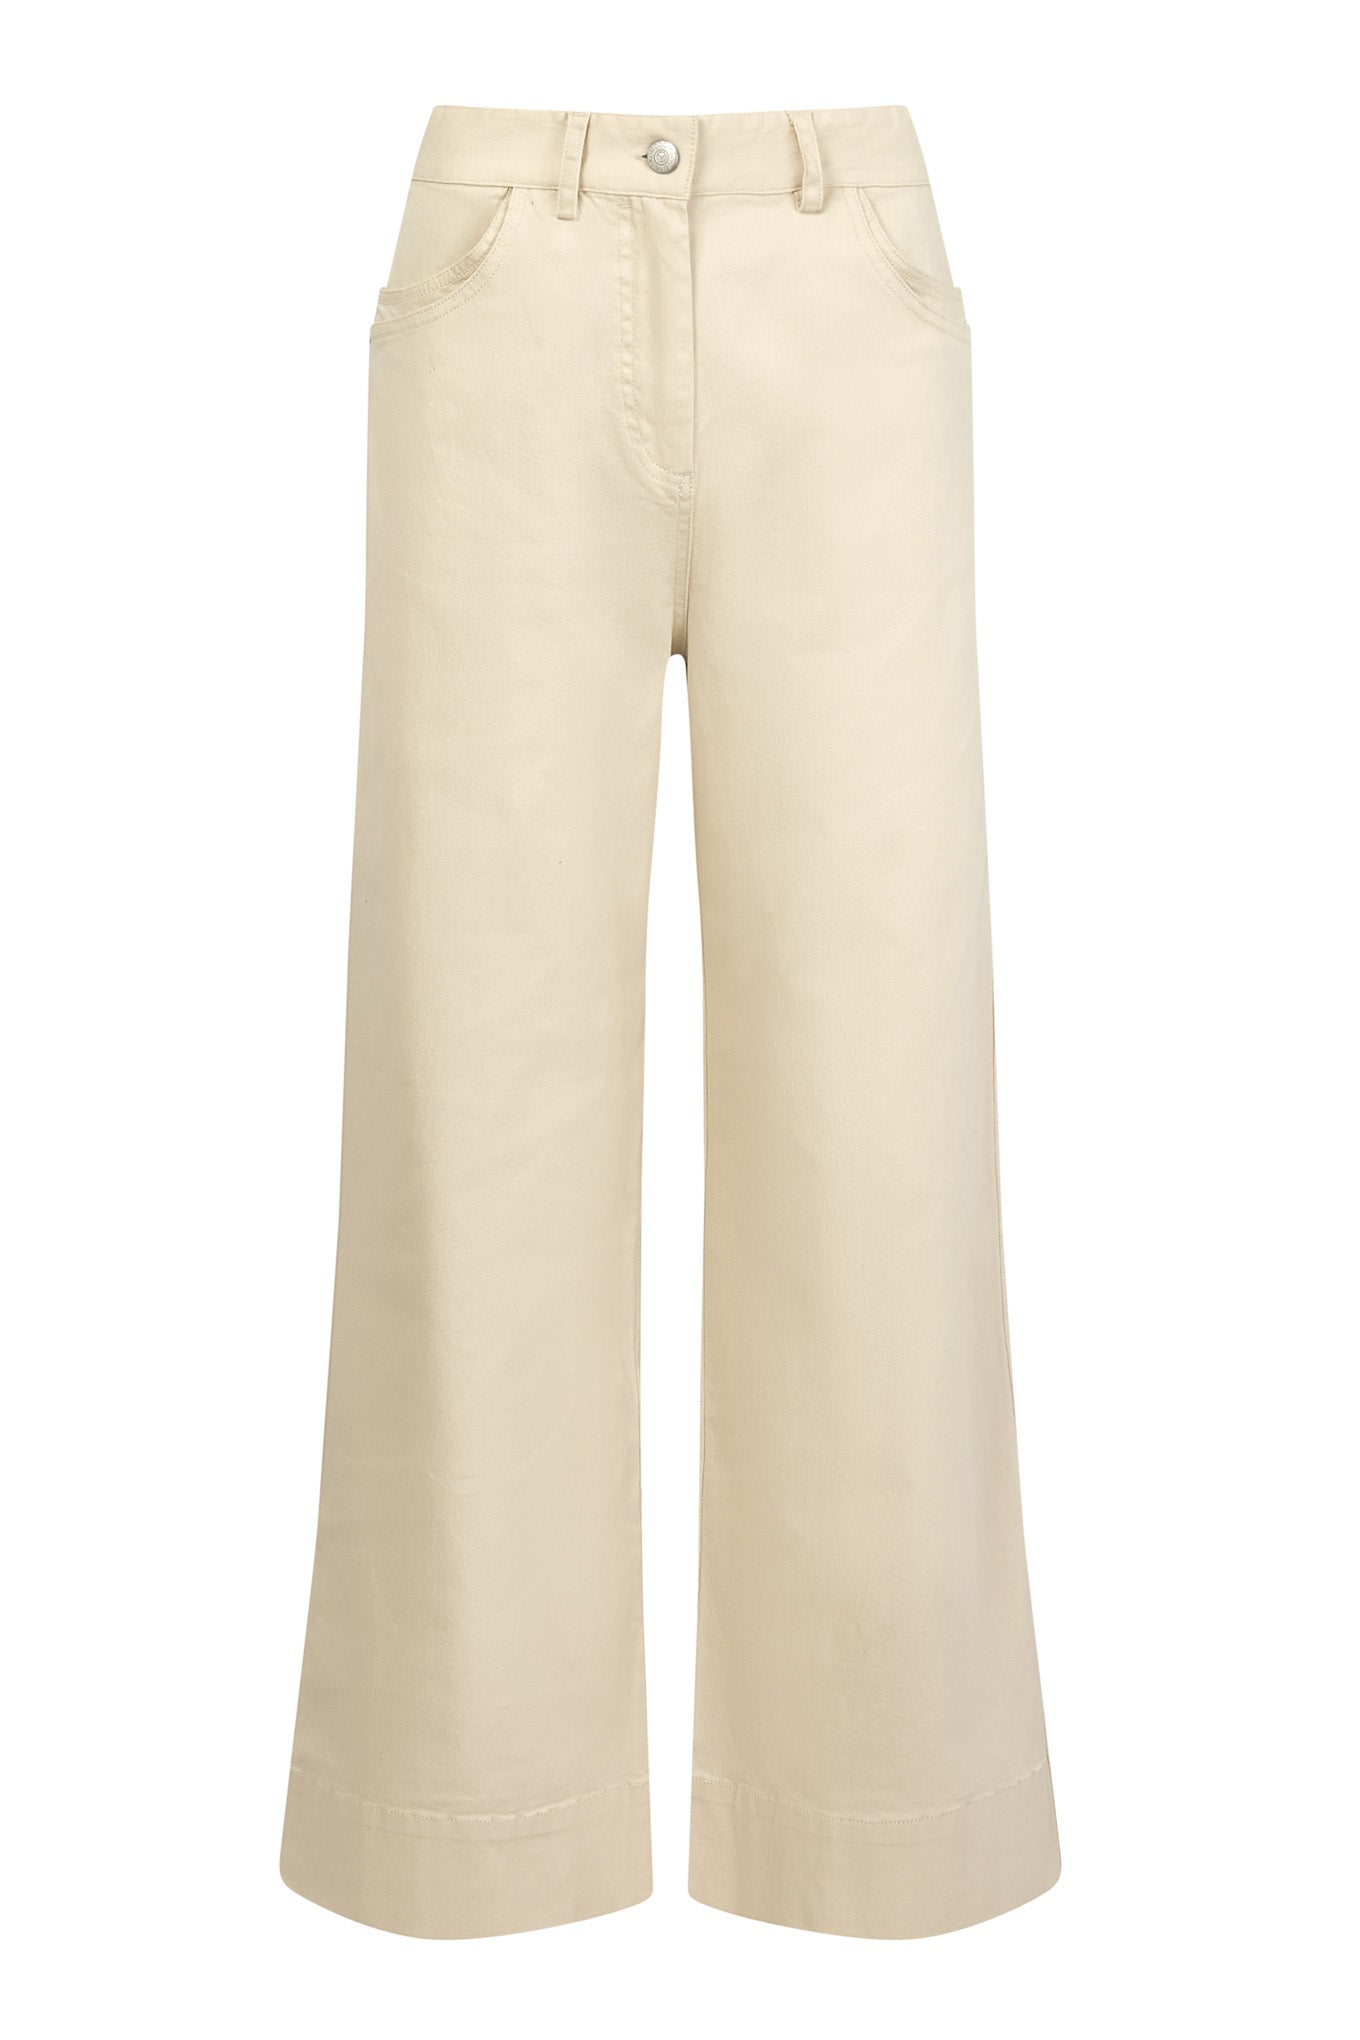 LYNX Organic Cotton Trousers - Soft Putty